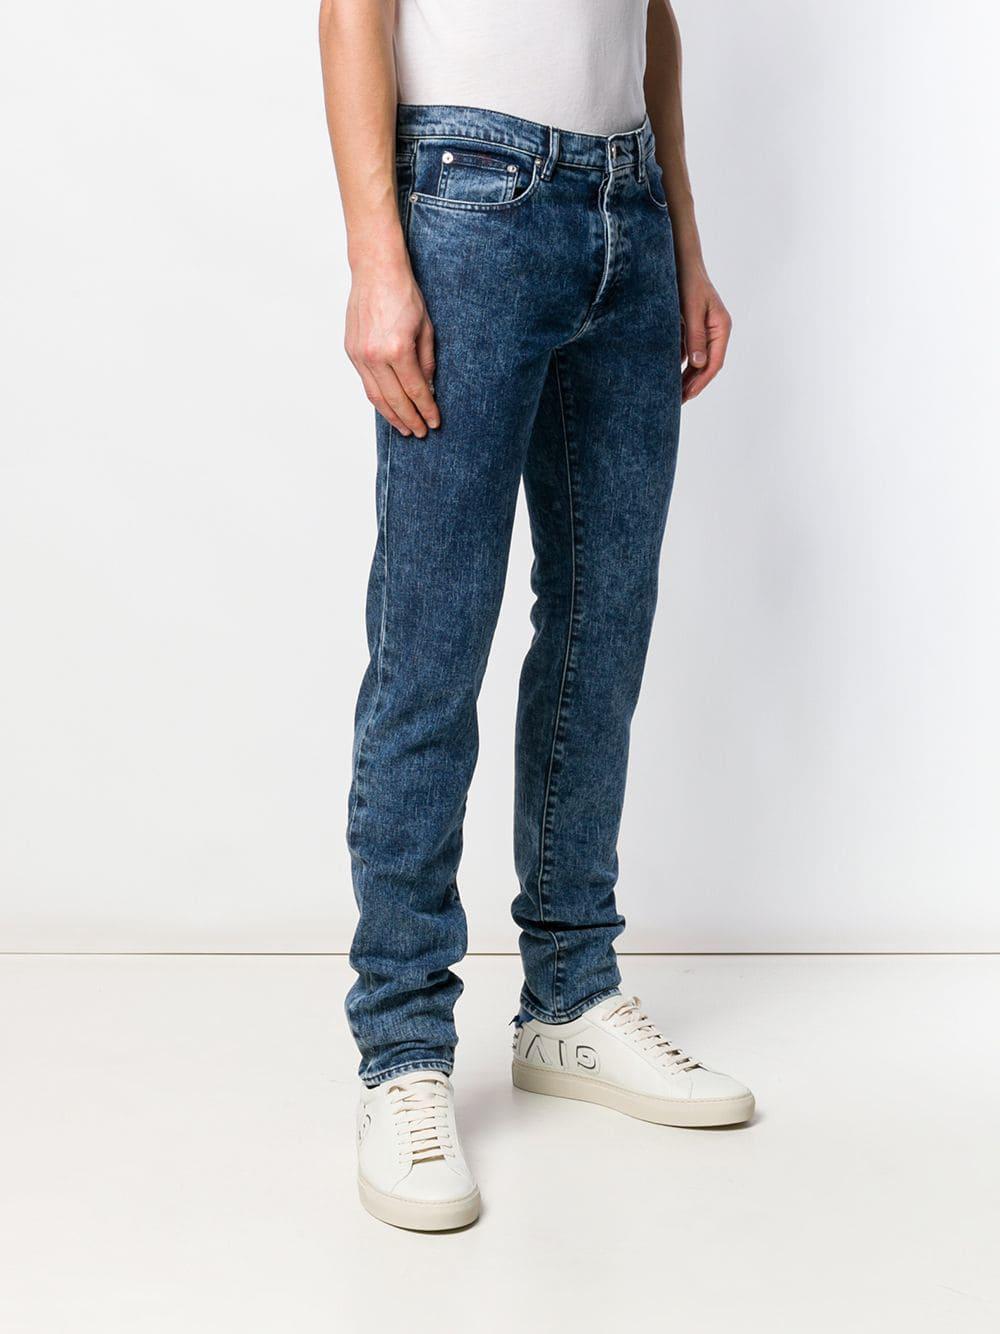 Givenchy Denim Slim-fit Jeans in Blue for Men - Lyst